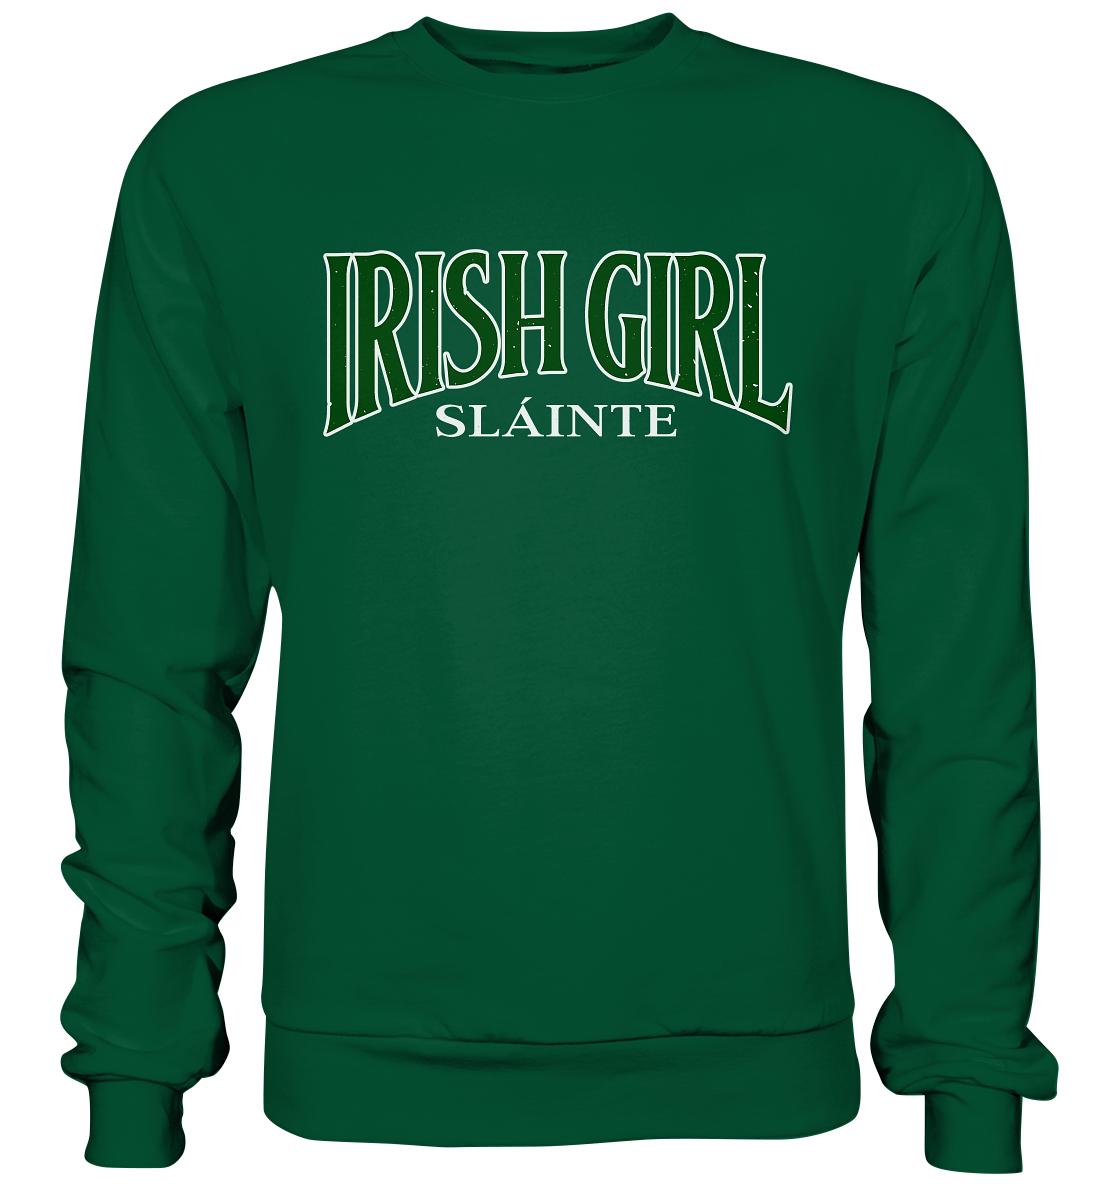 Irish Girl "Sláinte" - Basic Sweatshirt